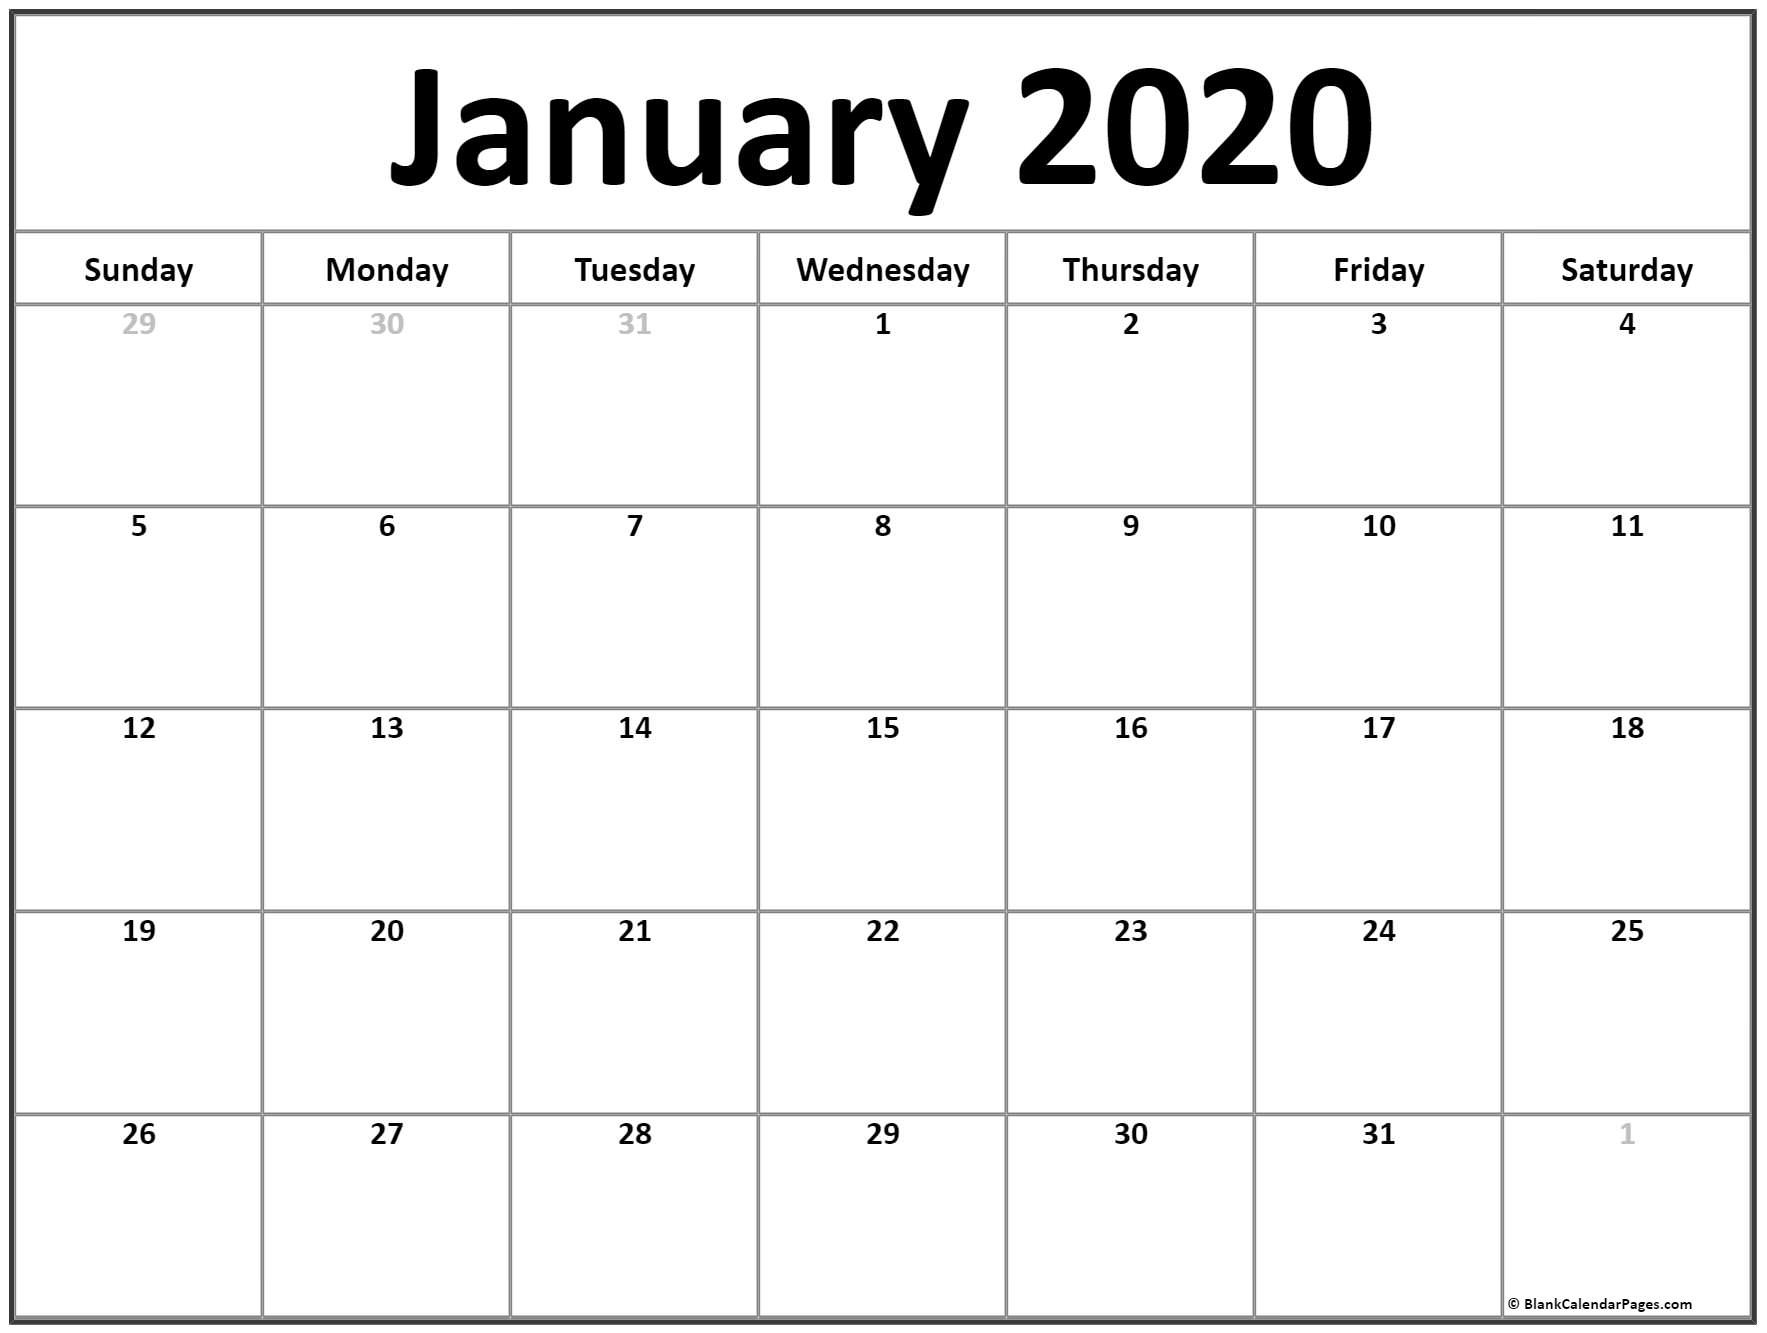 January 2020 Calendar | Free Printable Monthly Calendars-January Calendar For 2020